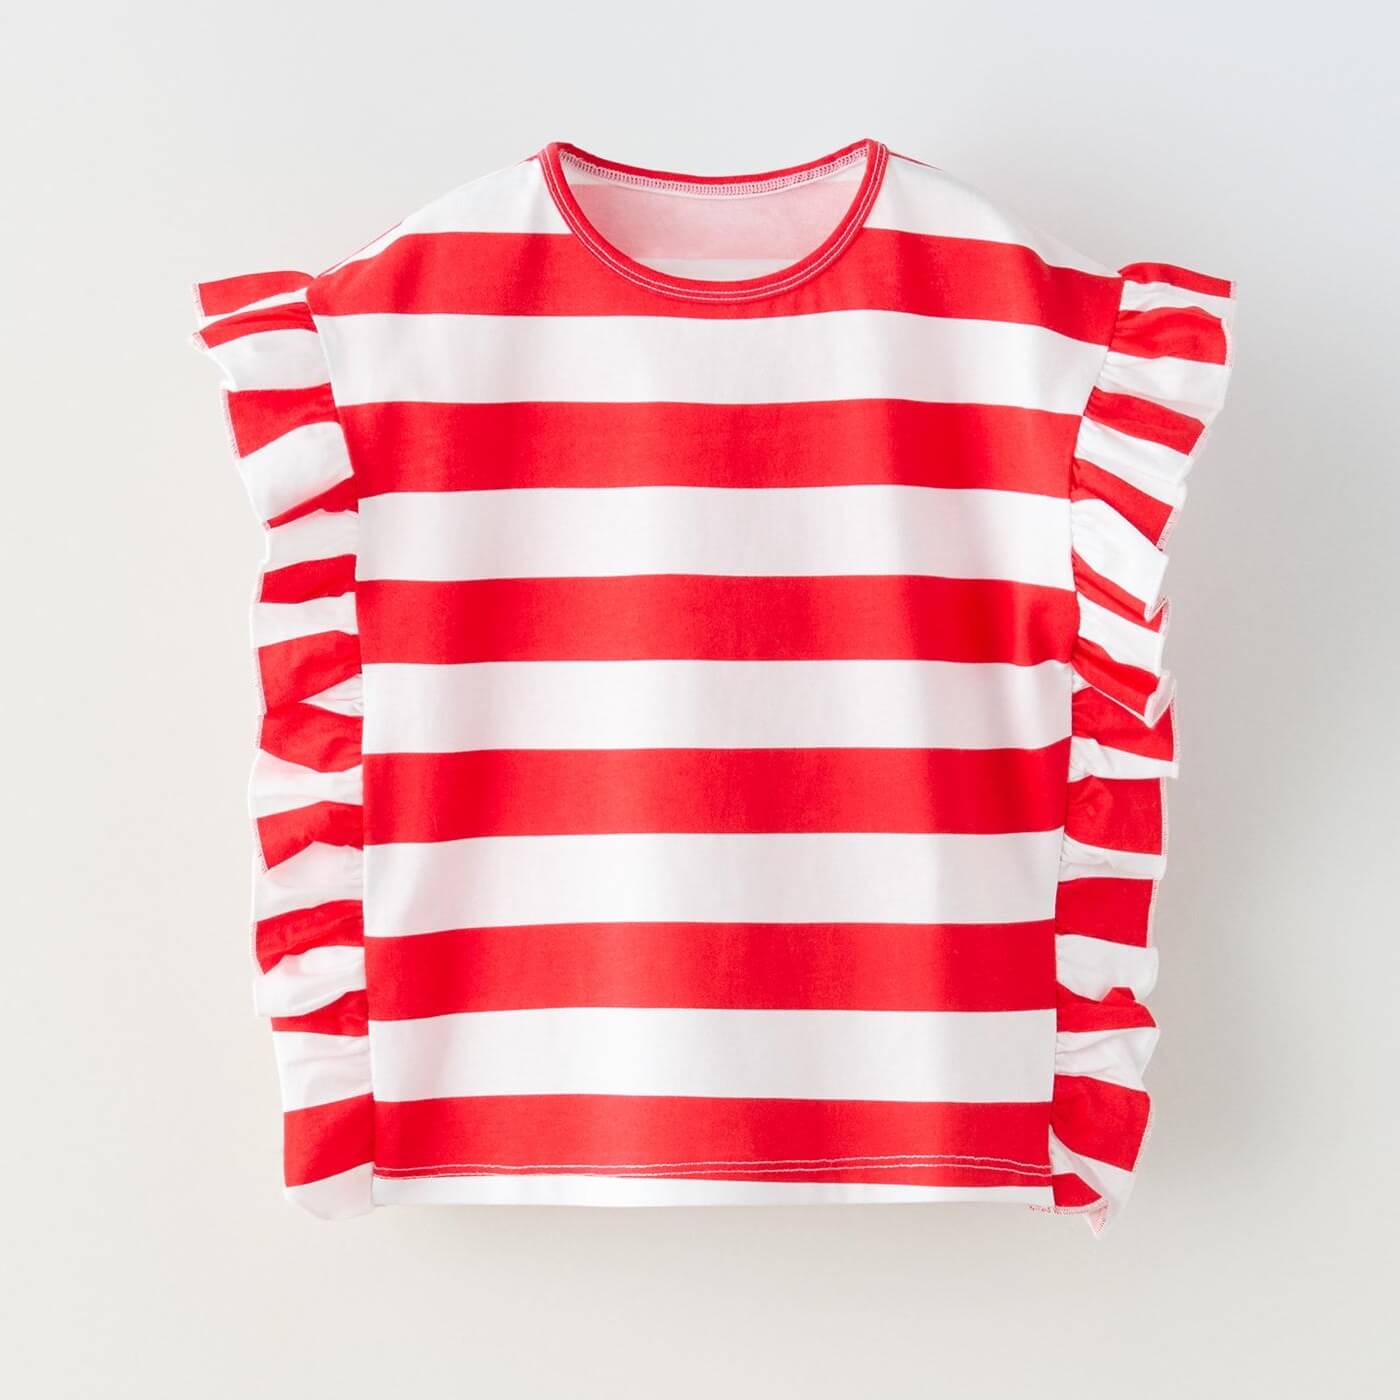 Футболка Zara Striped With Ruffle Trims, красный/белый футболка zara striped with patch белый черный